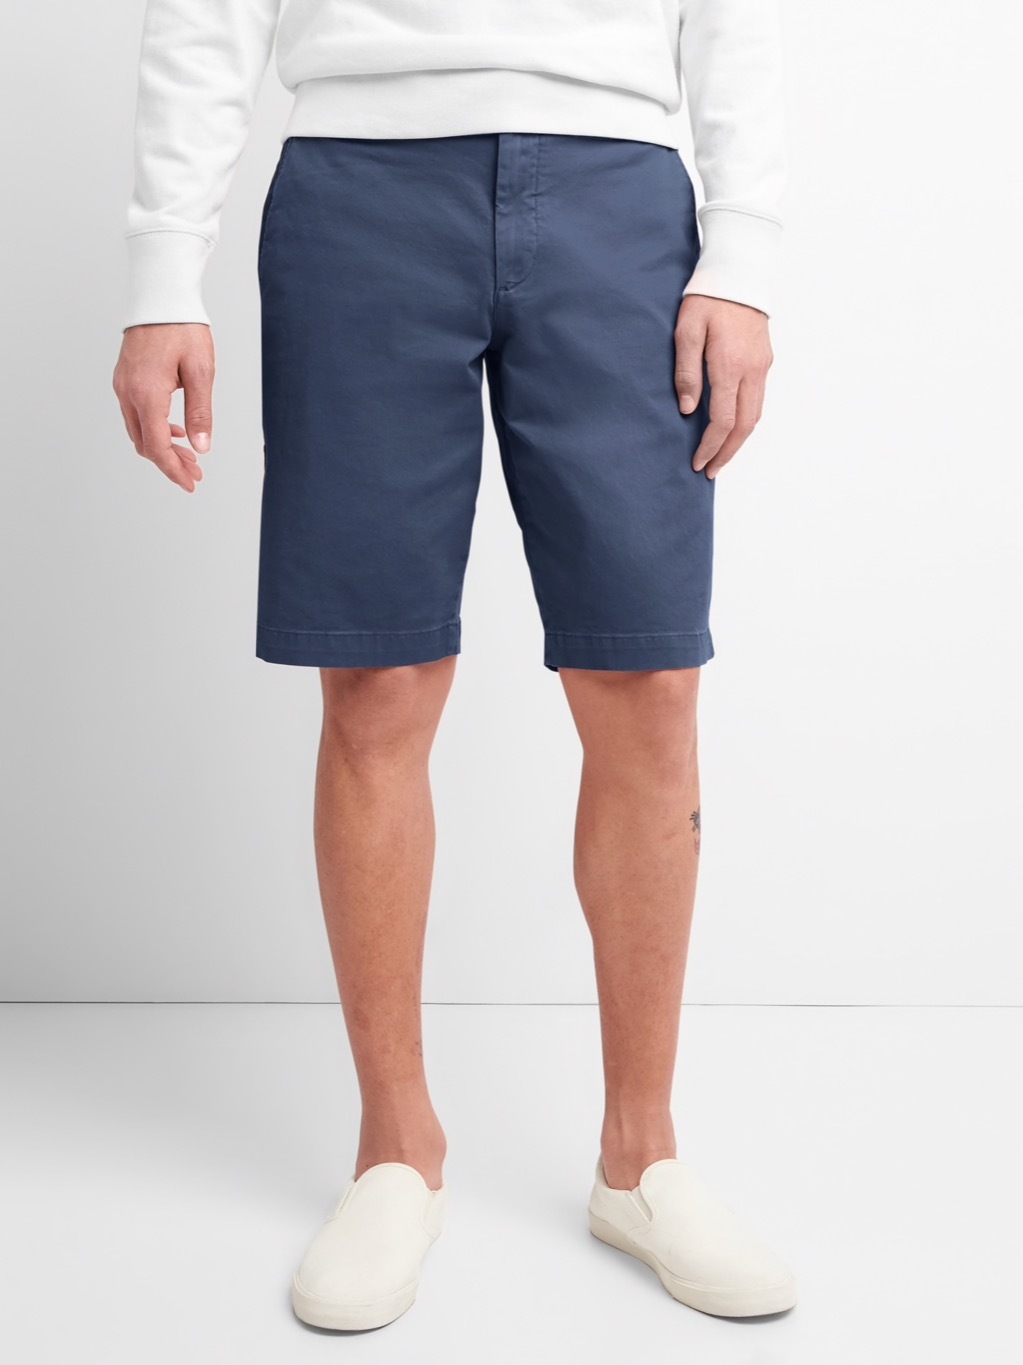 gap shorts summer essentials 